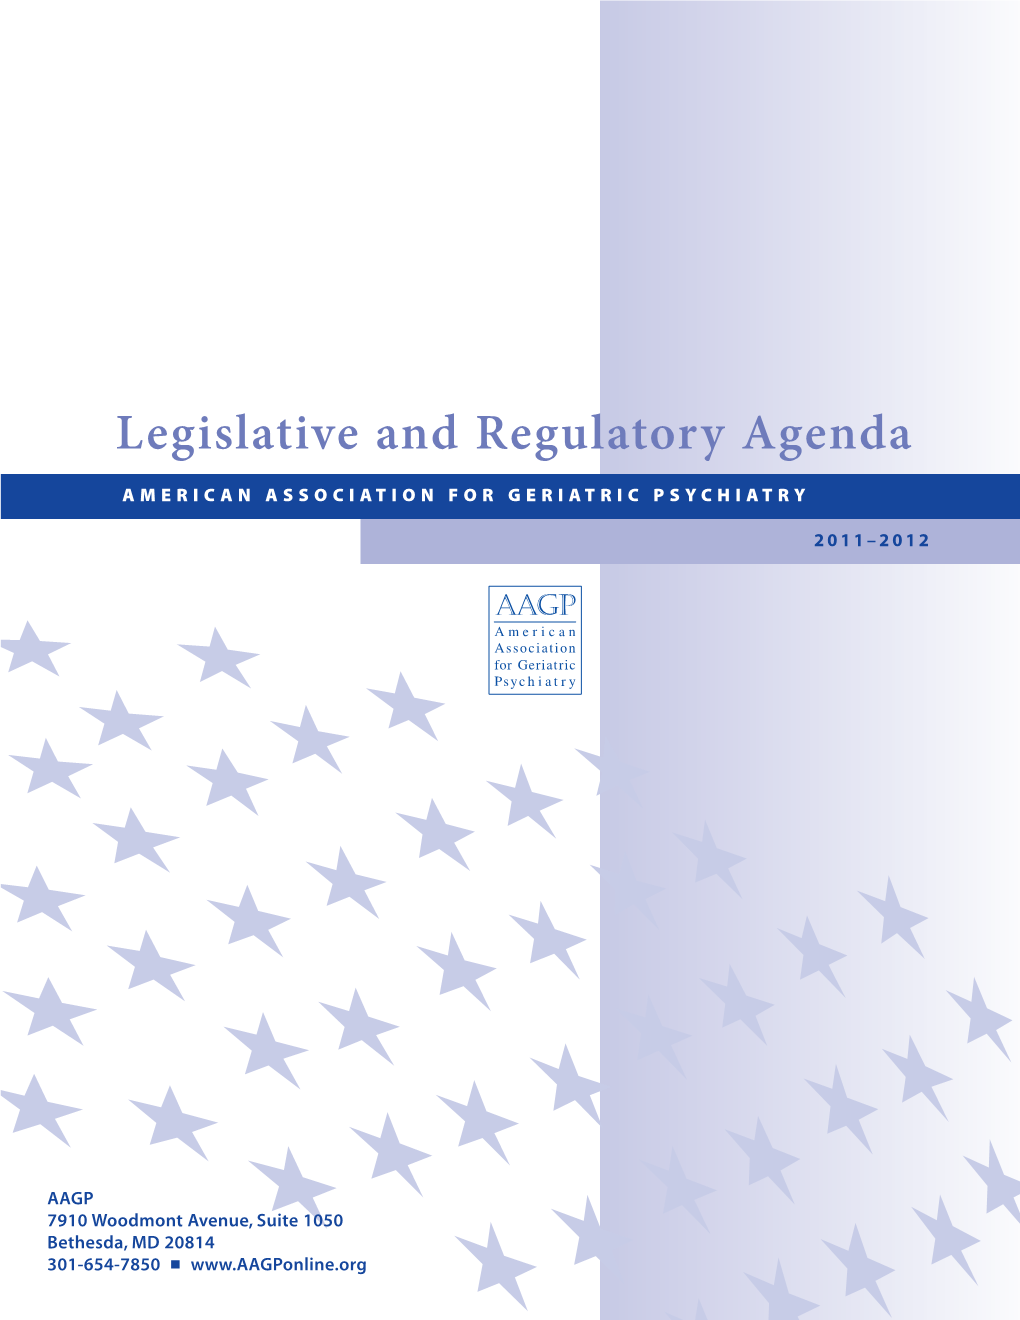 Download the 2011-2012 AAGP Legislative and Regulatory Agenda